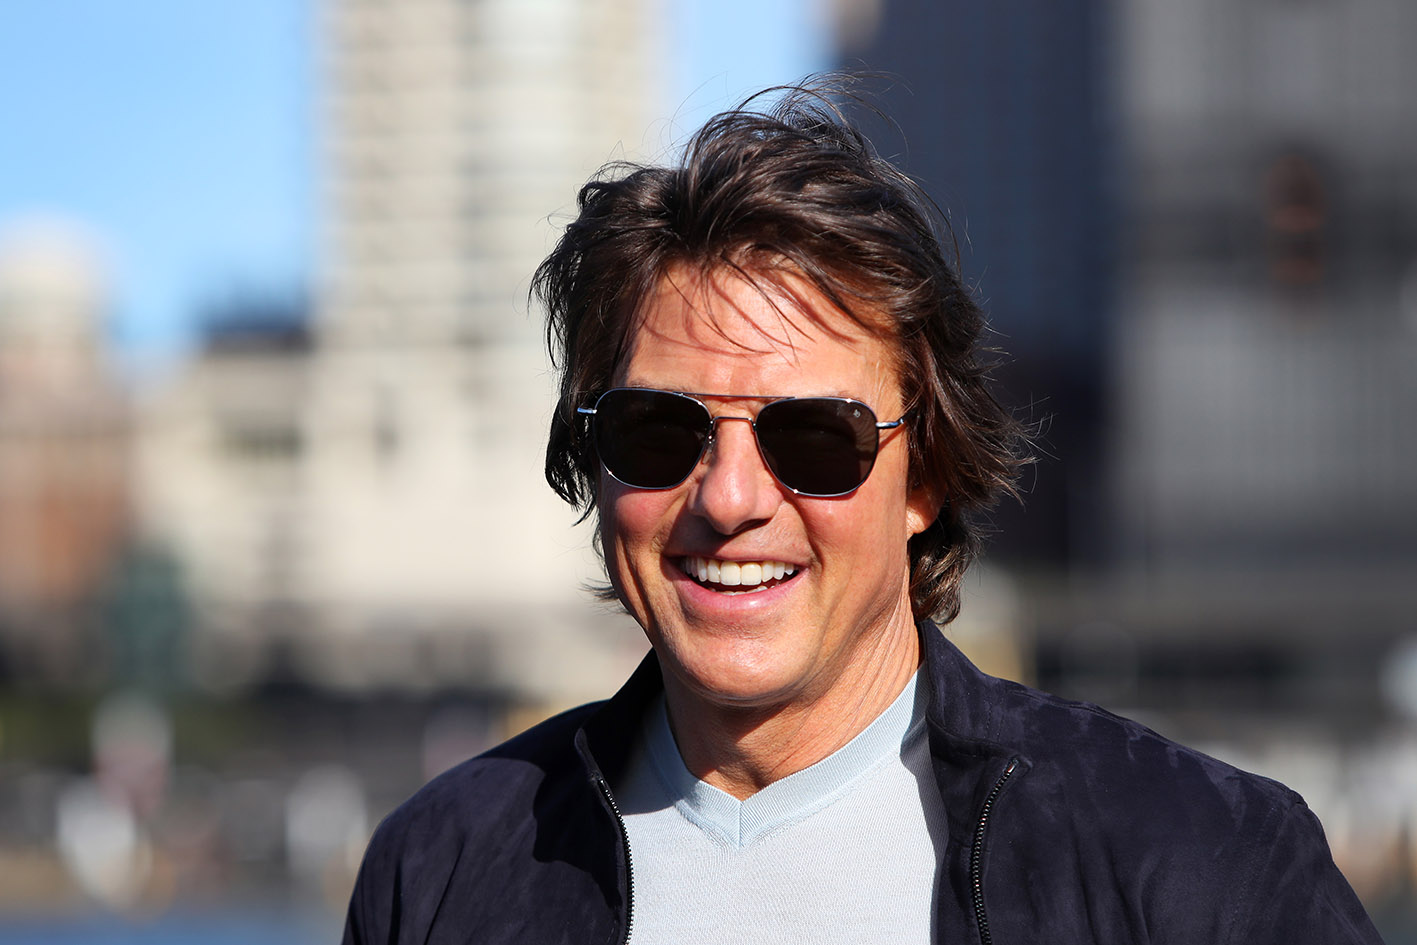 O Tom Cruise για τις ανάγκες της ταινίας "Mission: Impossible - Dead Reckoning Part One" βρέθηκε στο Σίδνει της Αυστραλίας στις 2 Ιουλίου 2023.